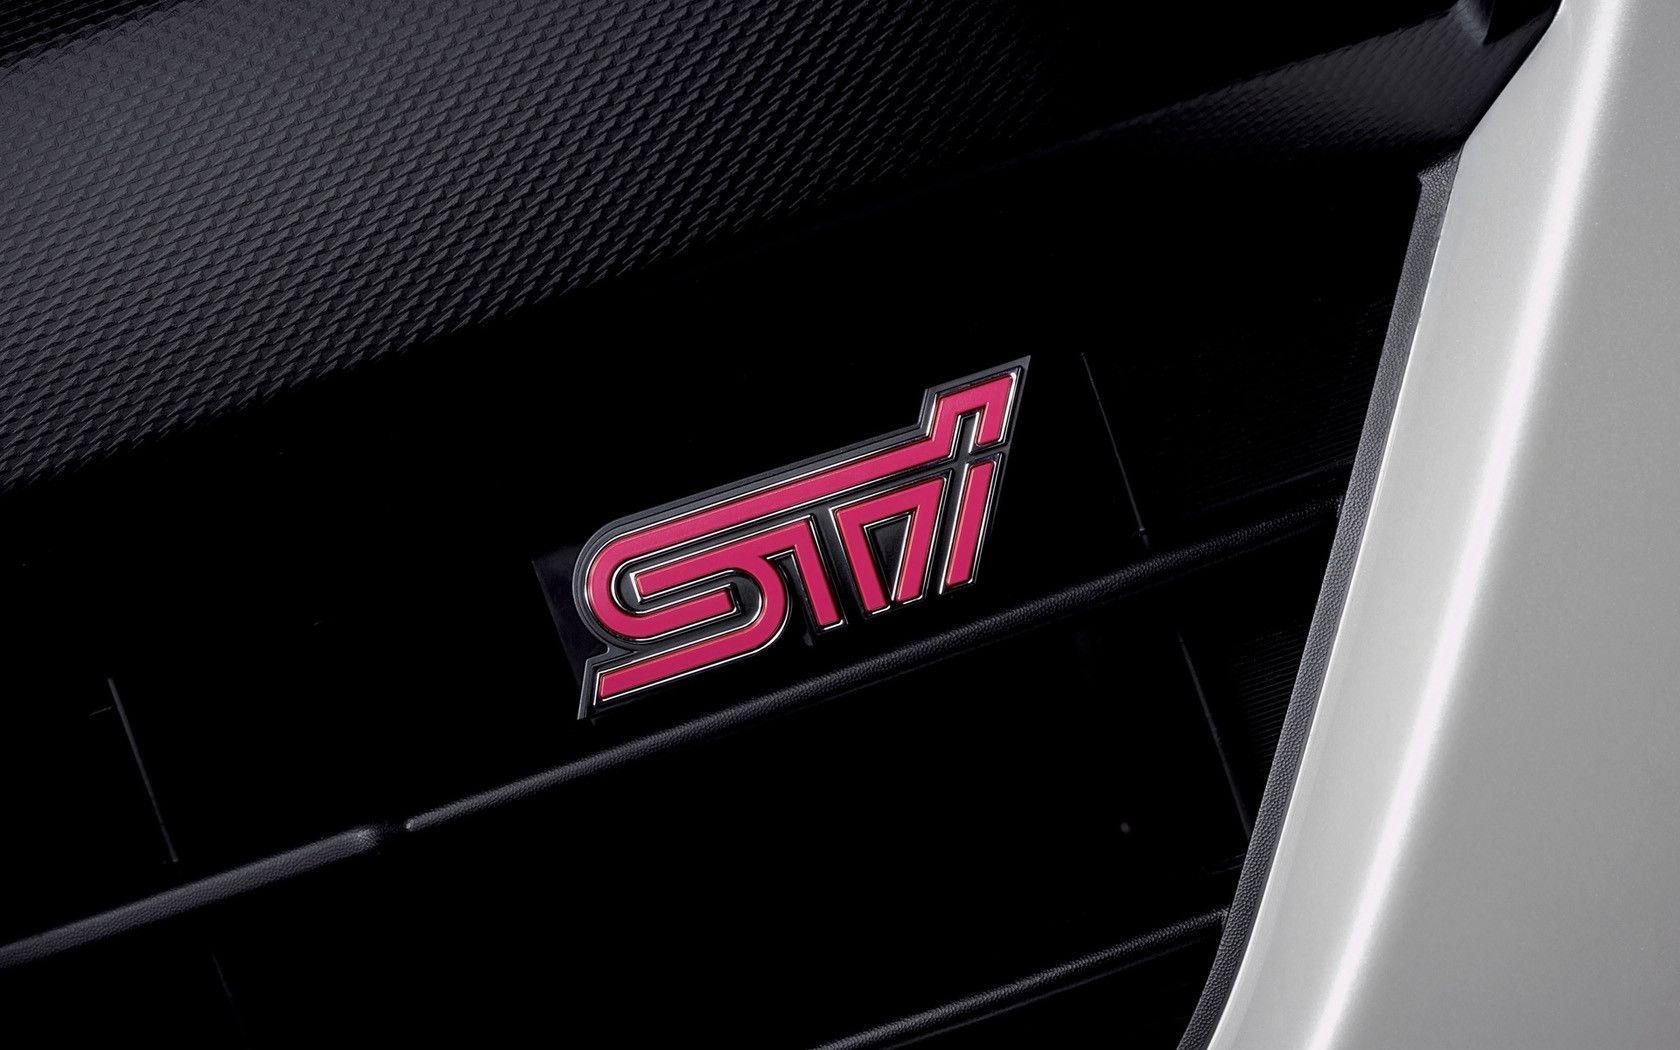 Subaru Logo Wallpapers